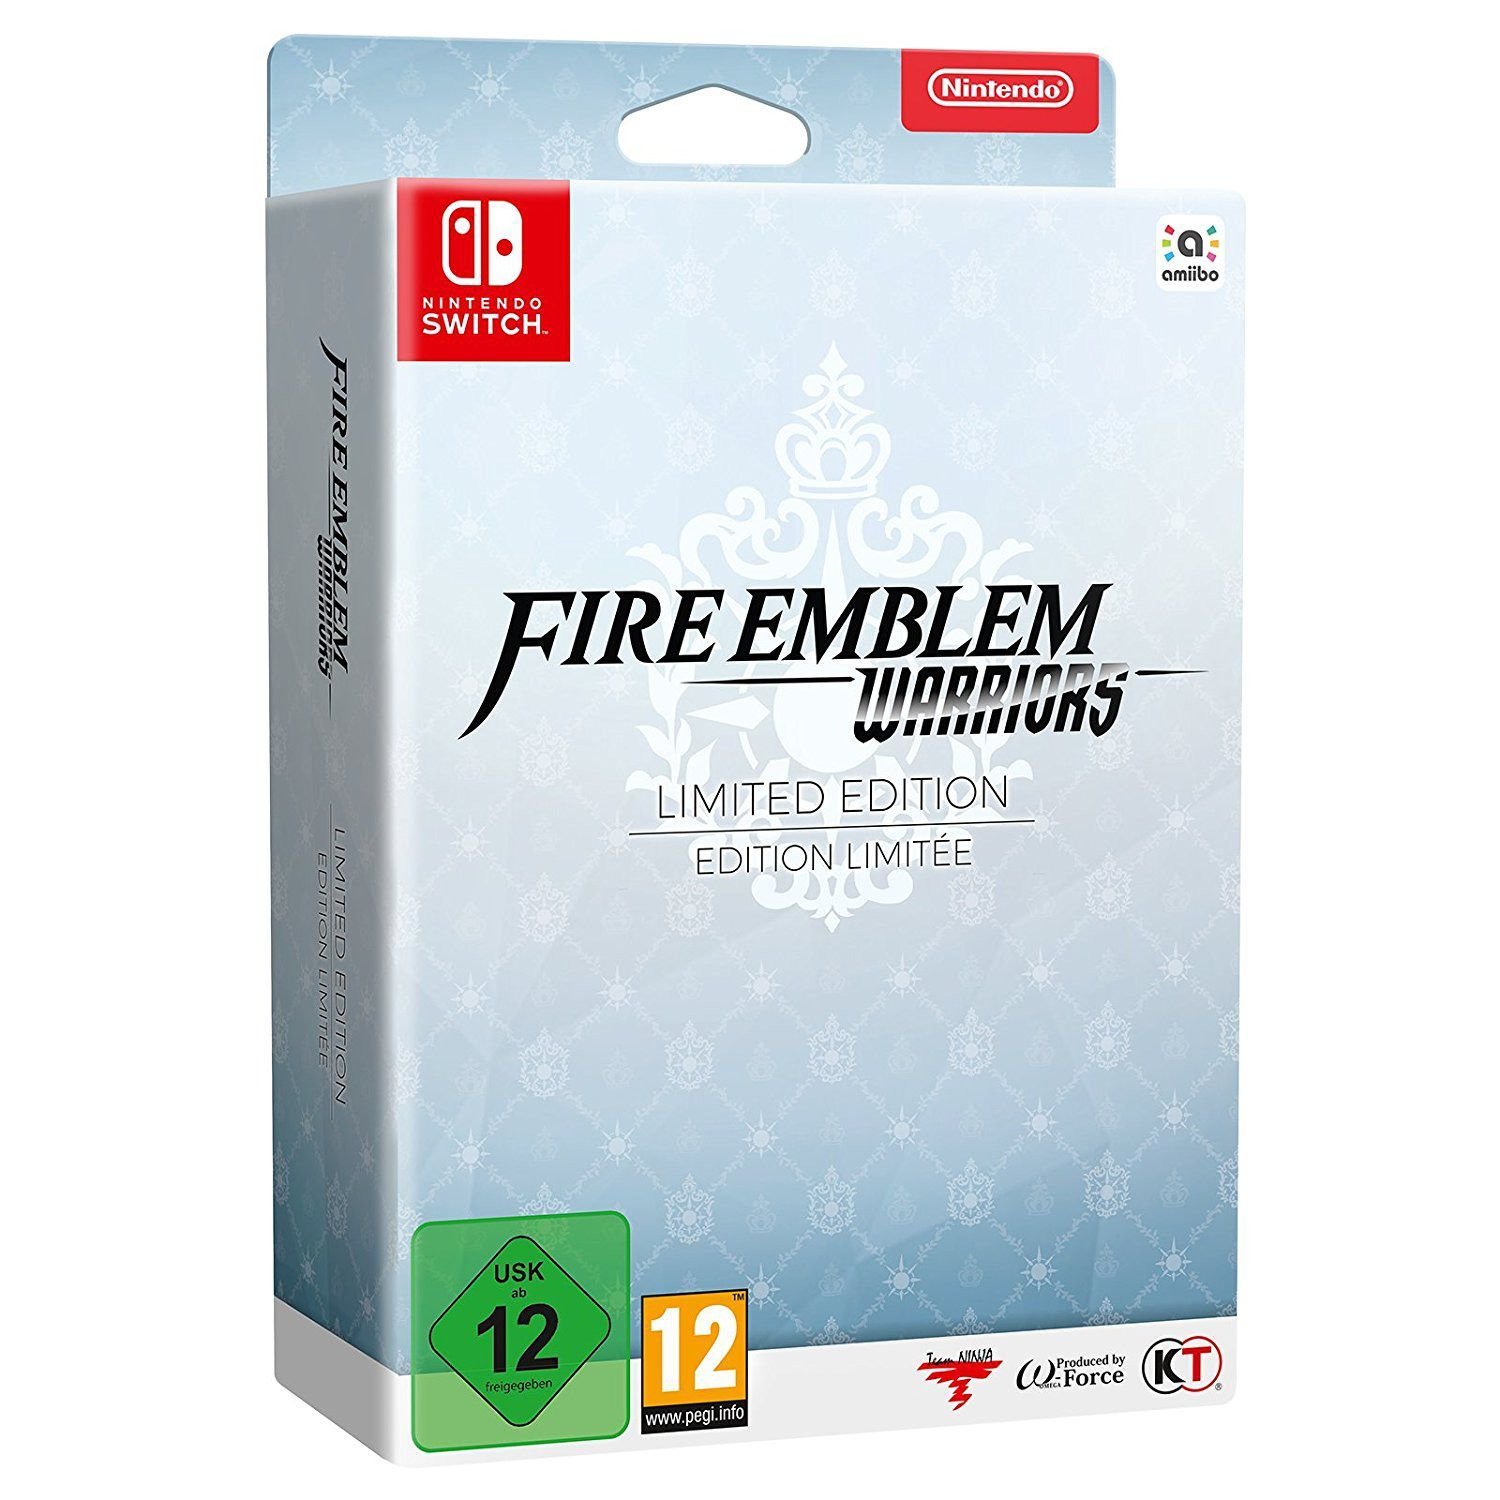 Fire Emblem Warriors Limited Edition - Nintendo Nintendo Switch